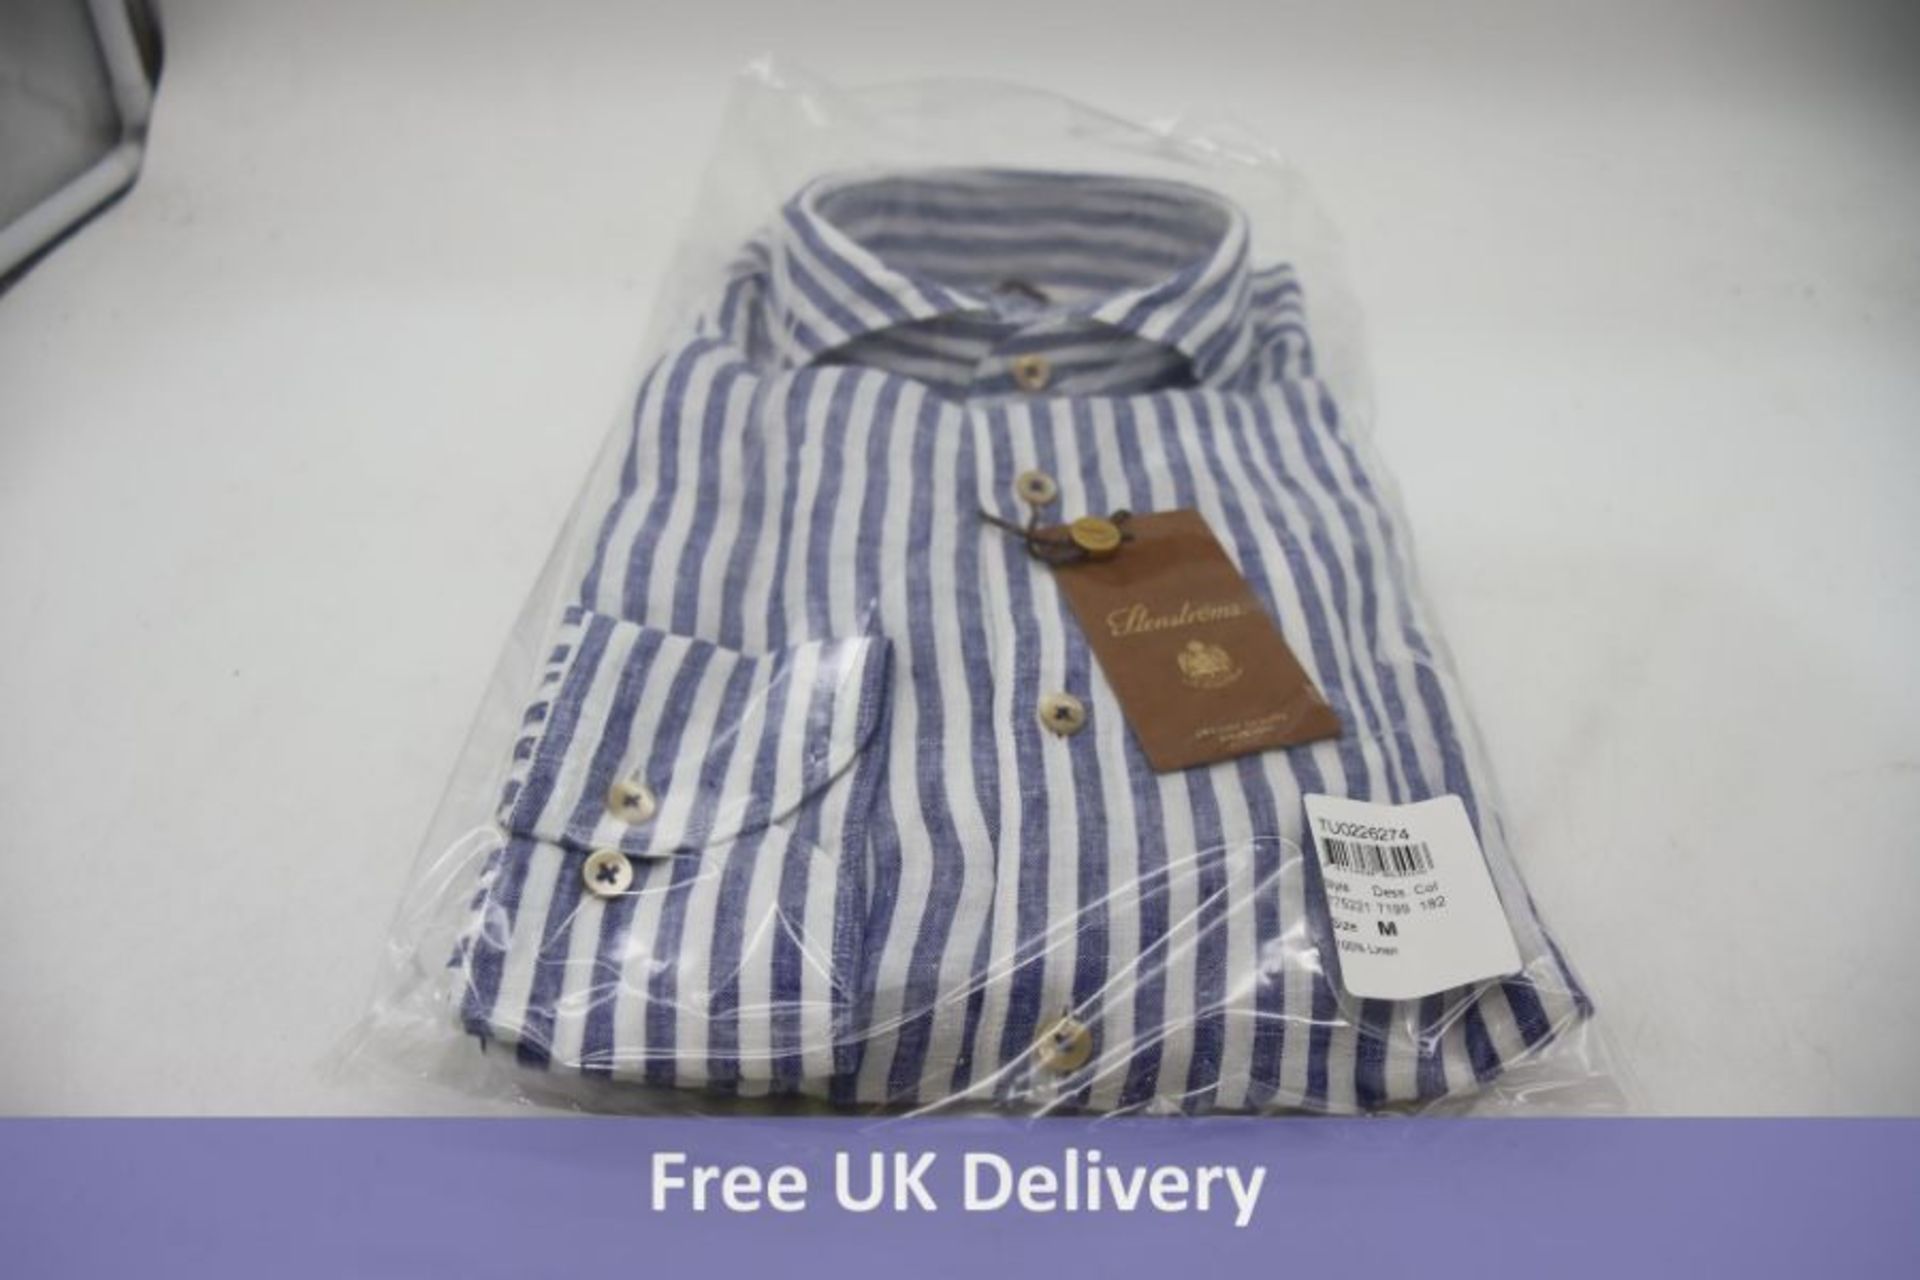 Stenstroms Fitted Body 100% Linen Shirt, Blue/White Stipes, Size XL